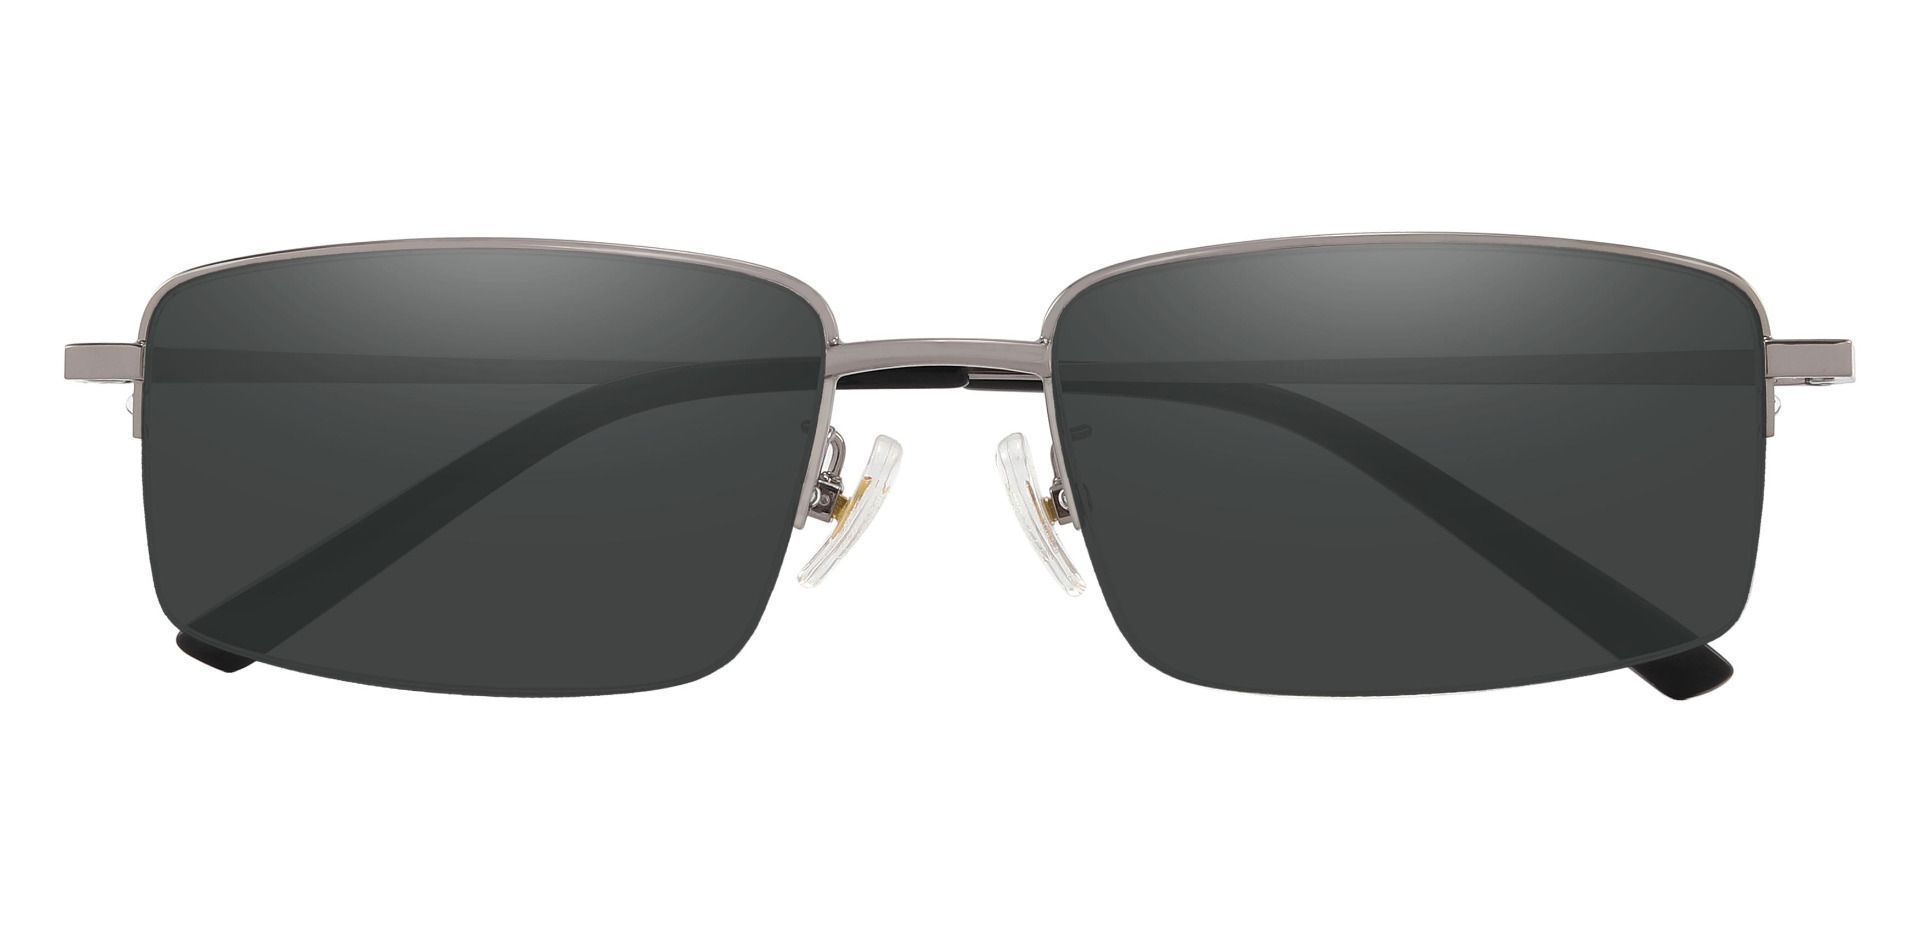 Wayne Rectangle Reading Sunglasses - Gray Frame With Gray Lenses